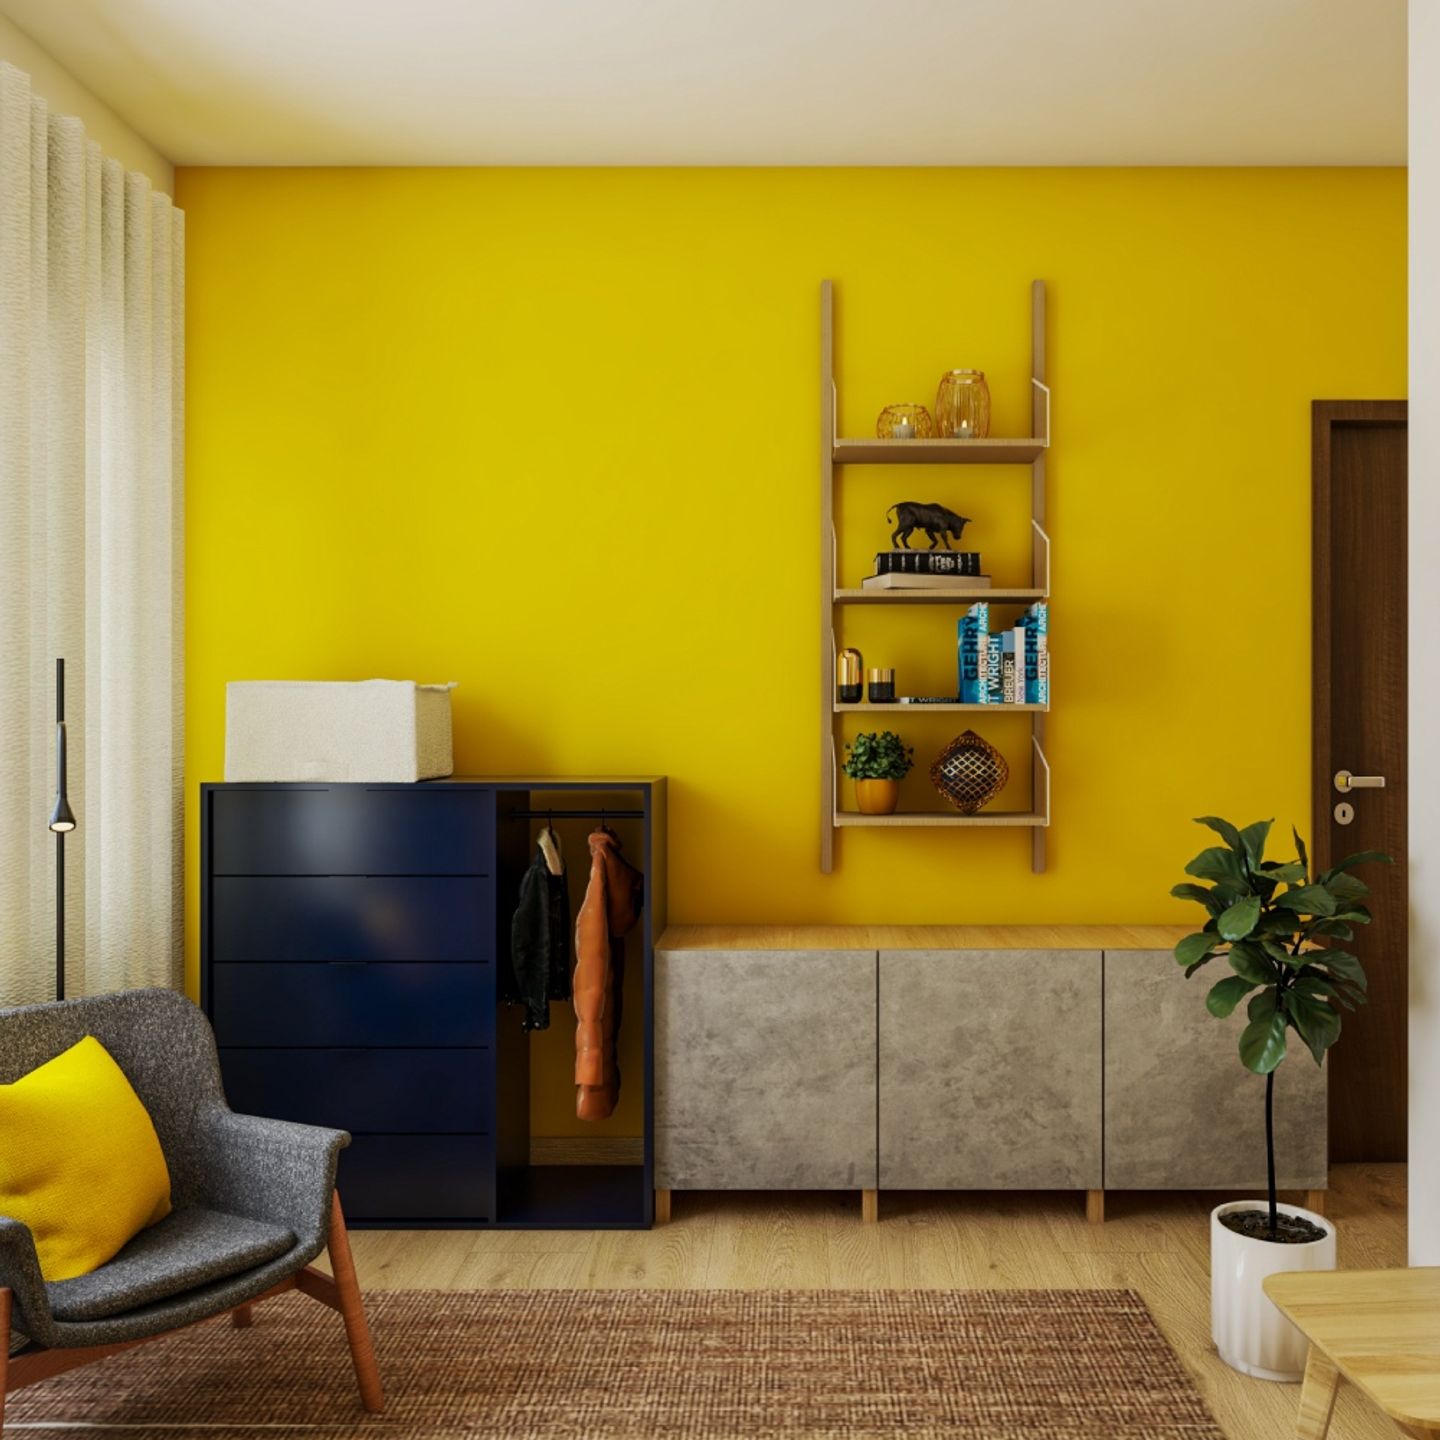 Modern Yellow Wall Paint Design With Framed Art